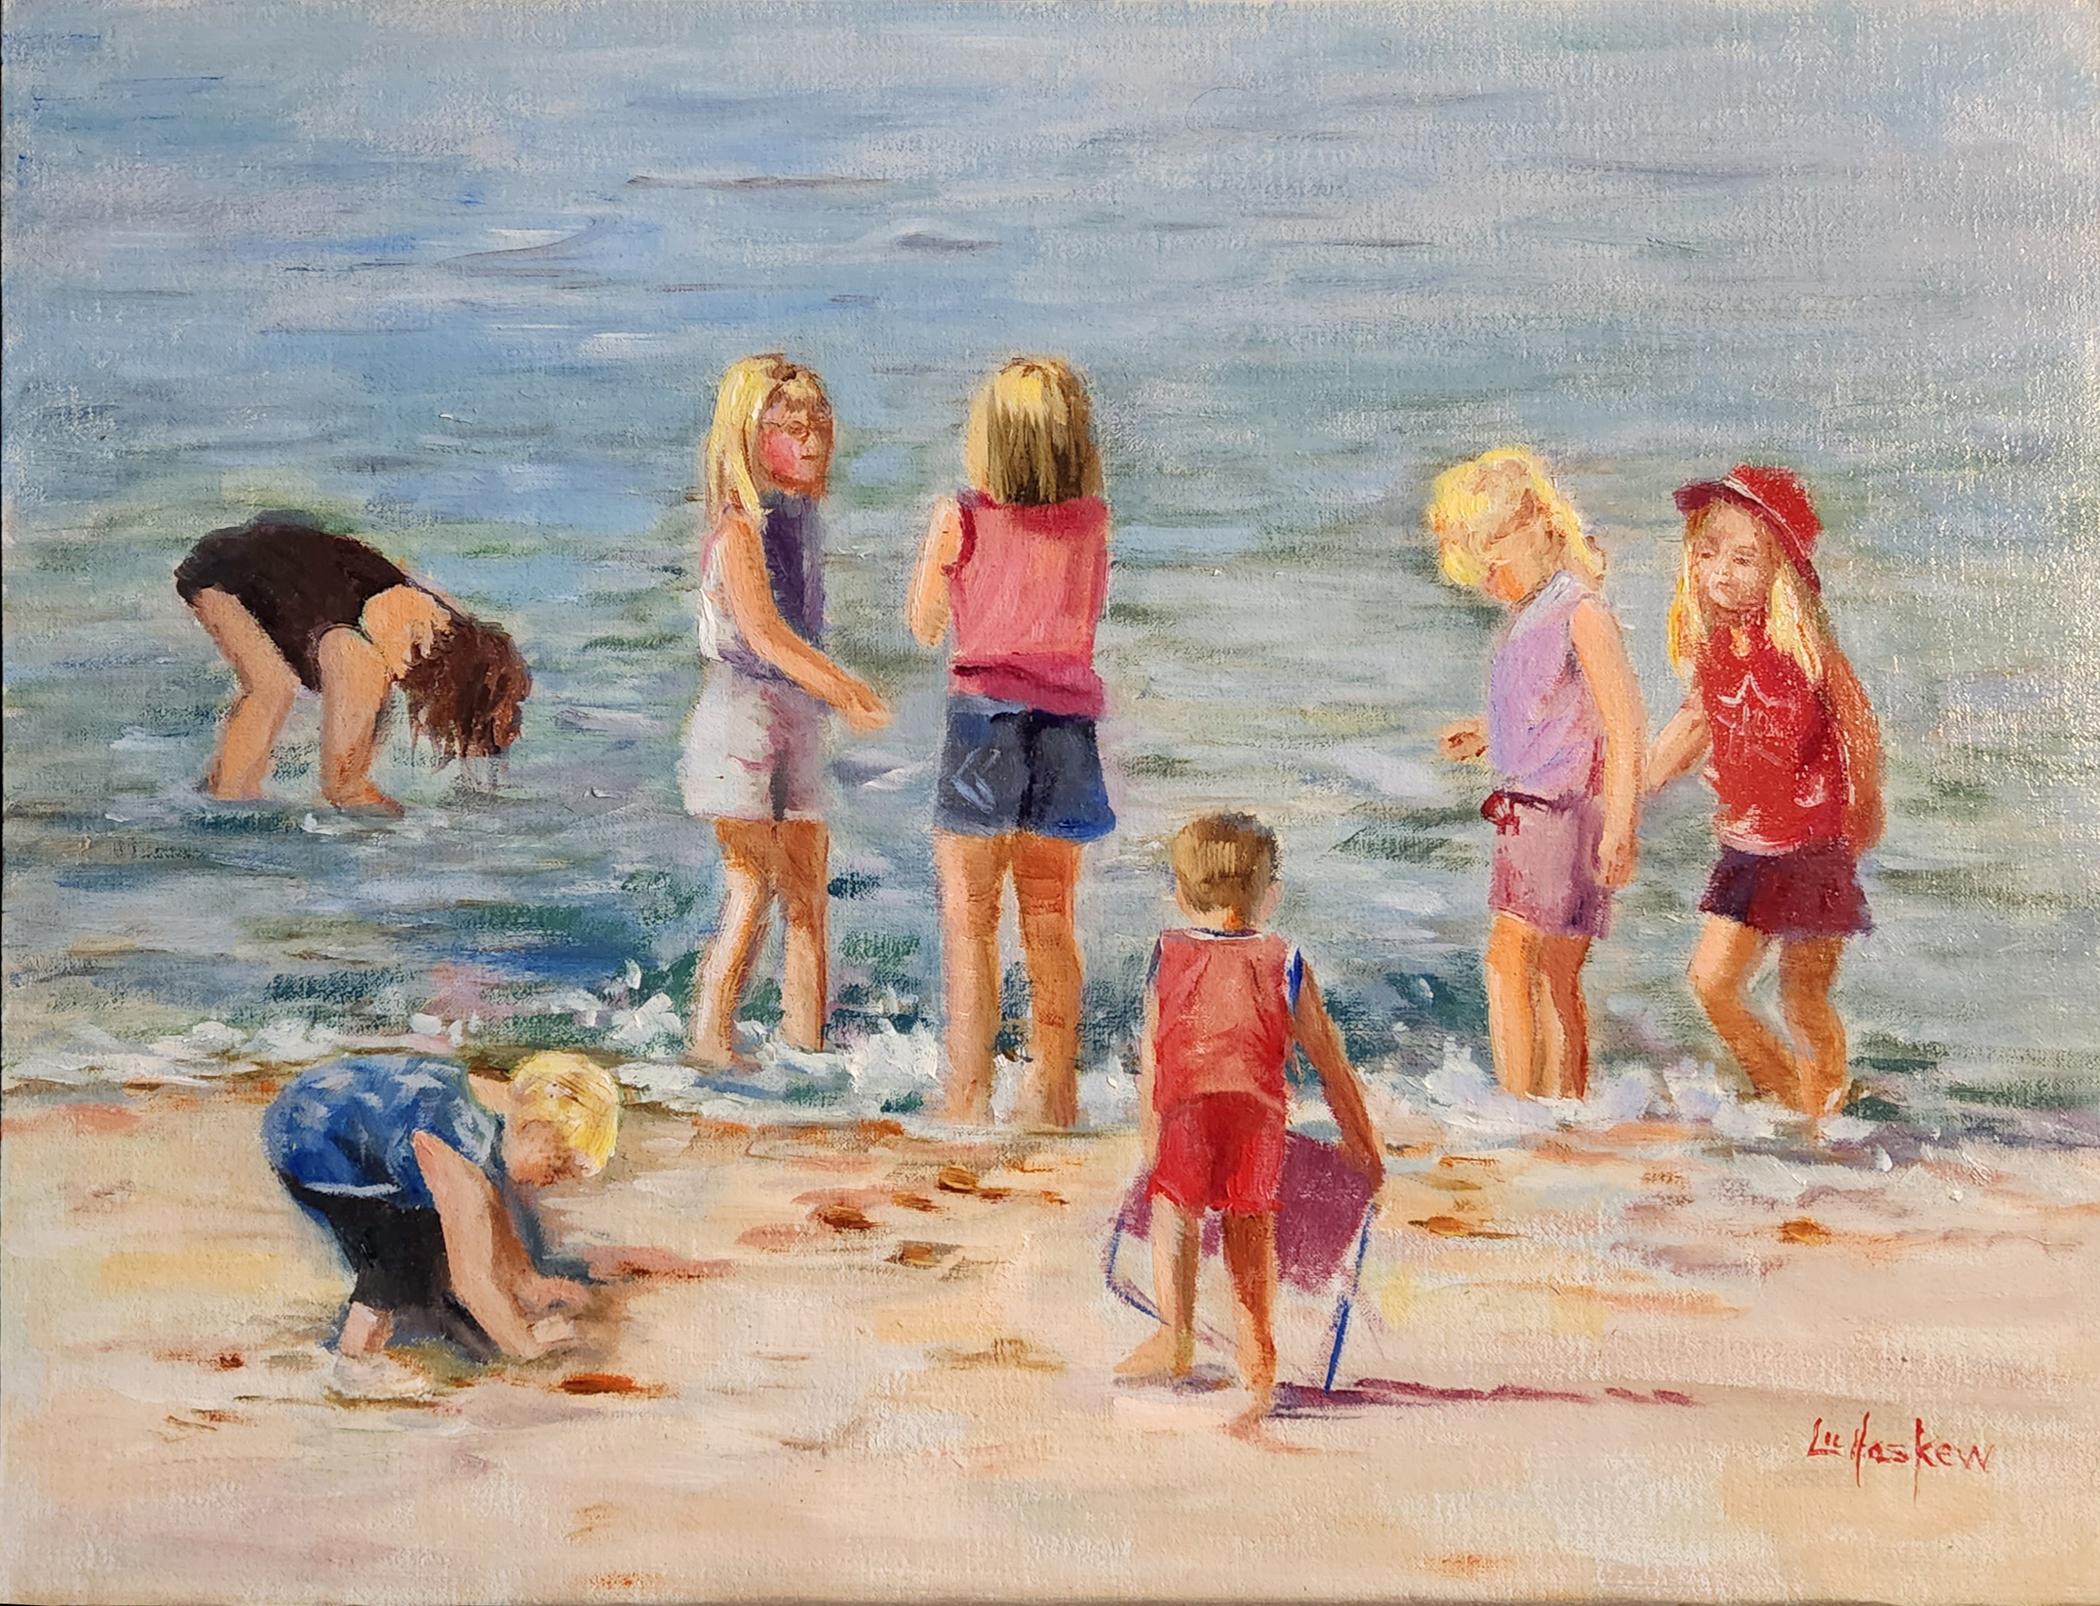 Lu Haskew Figurative Painting – Kinder am Strand, 12x16" Öl auf Karton